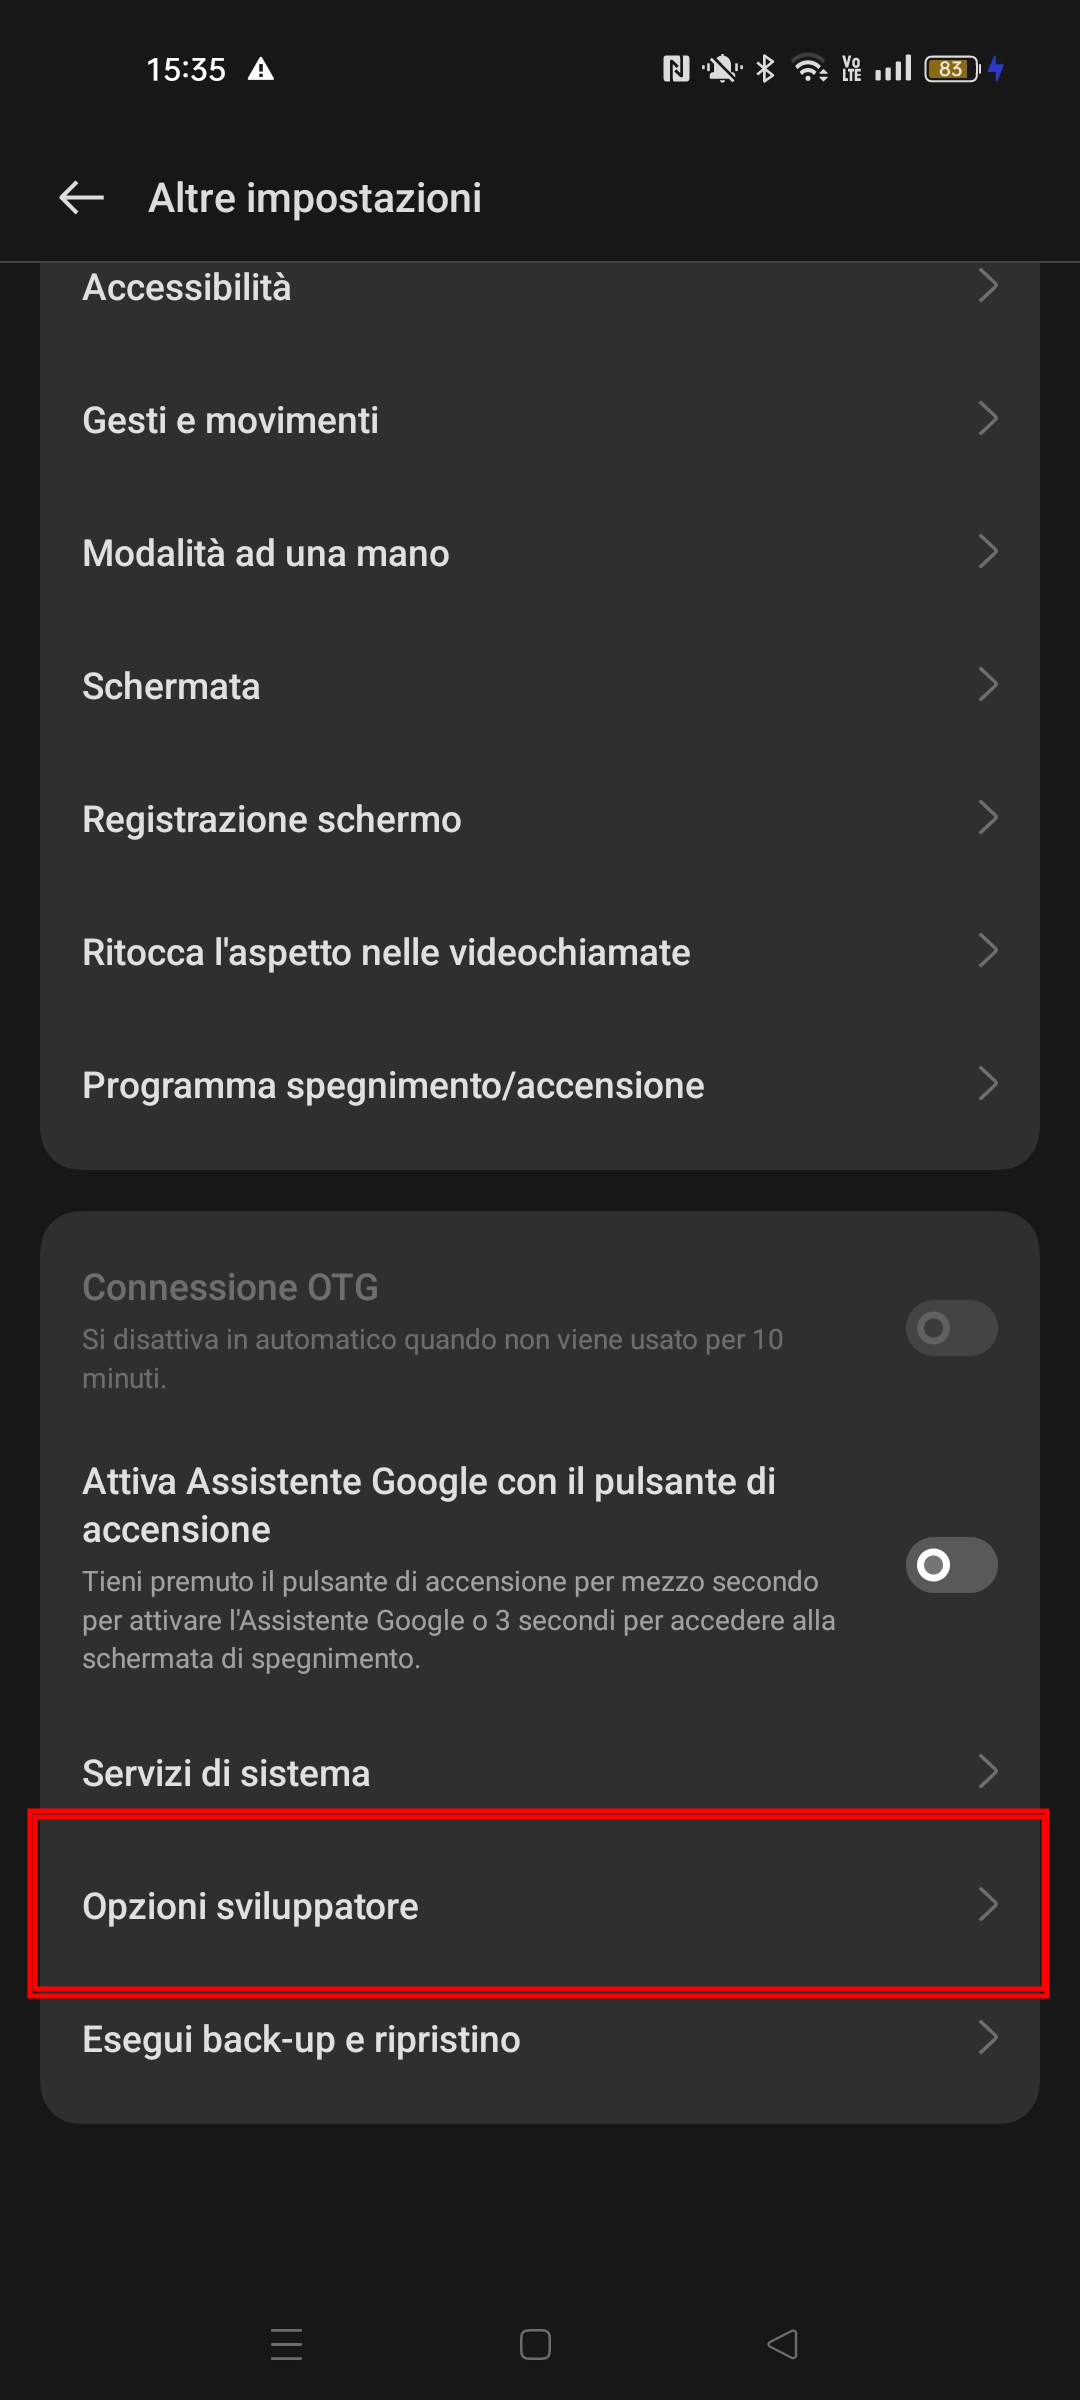 Opzioni sviluppatore Android